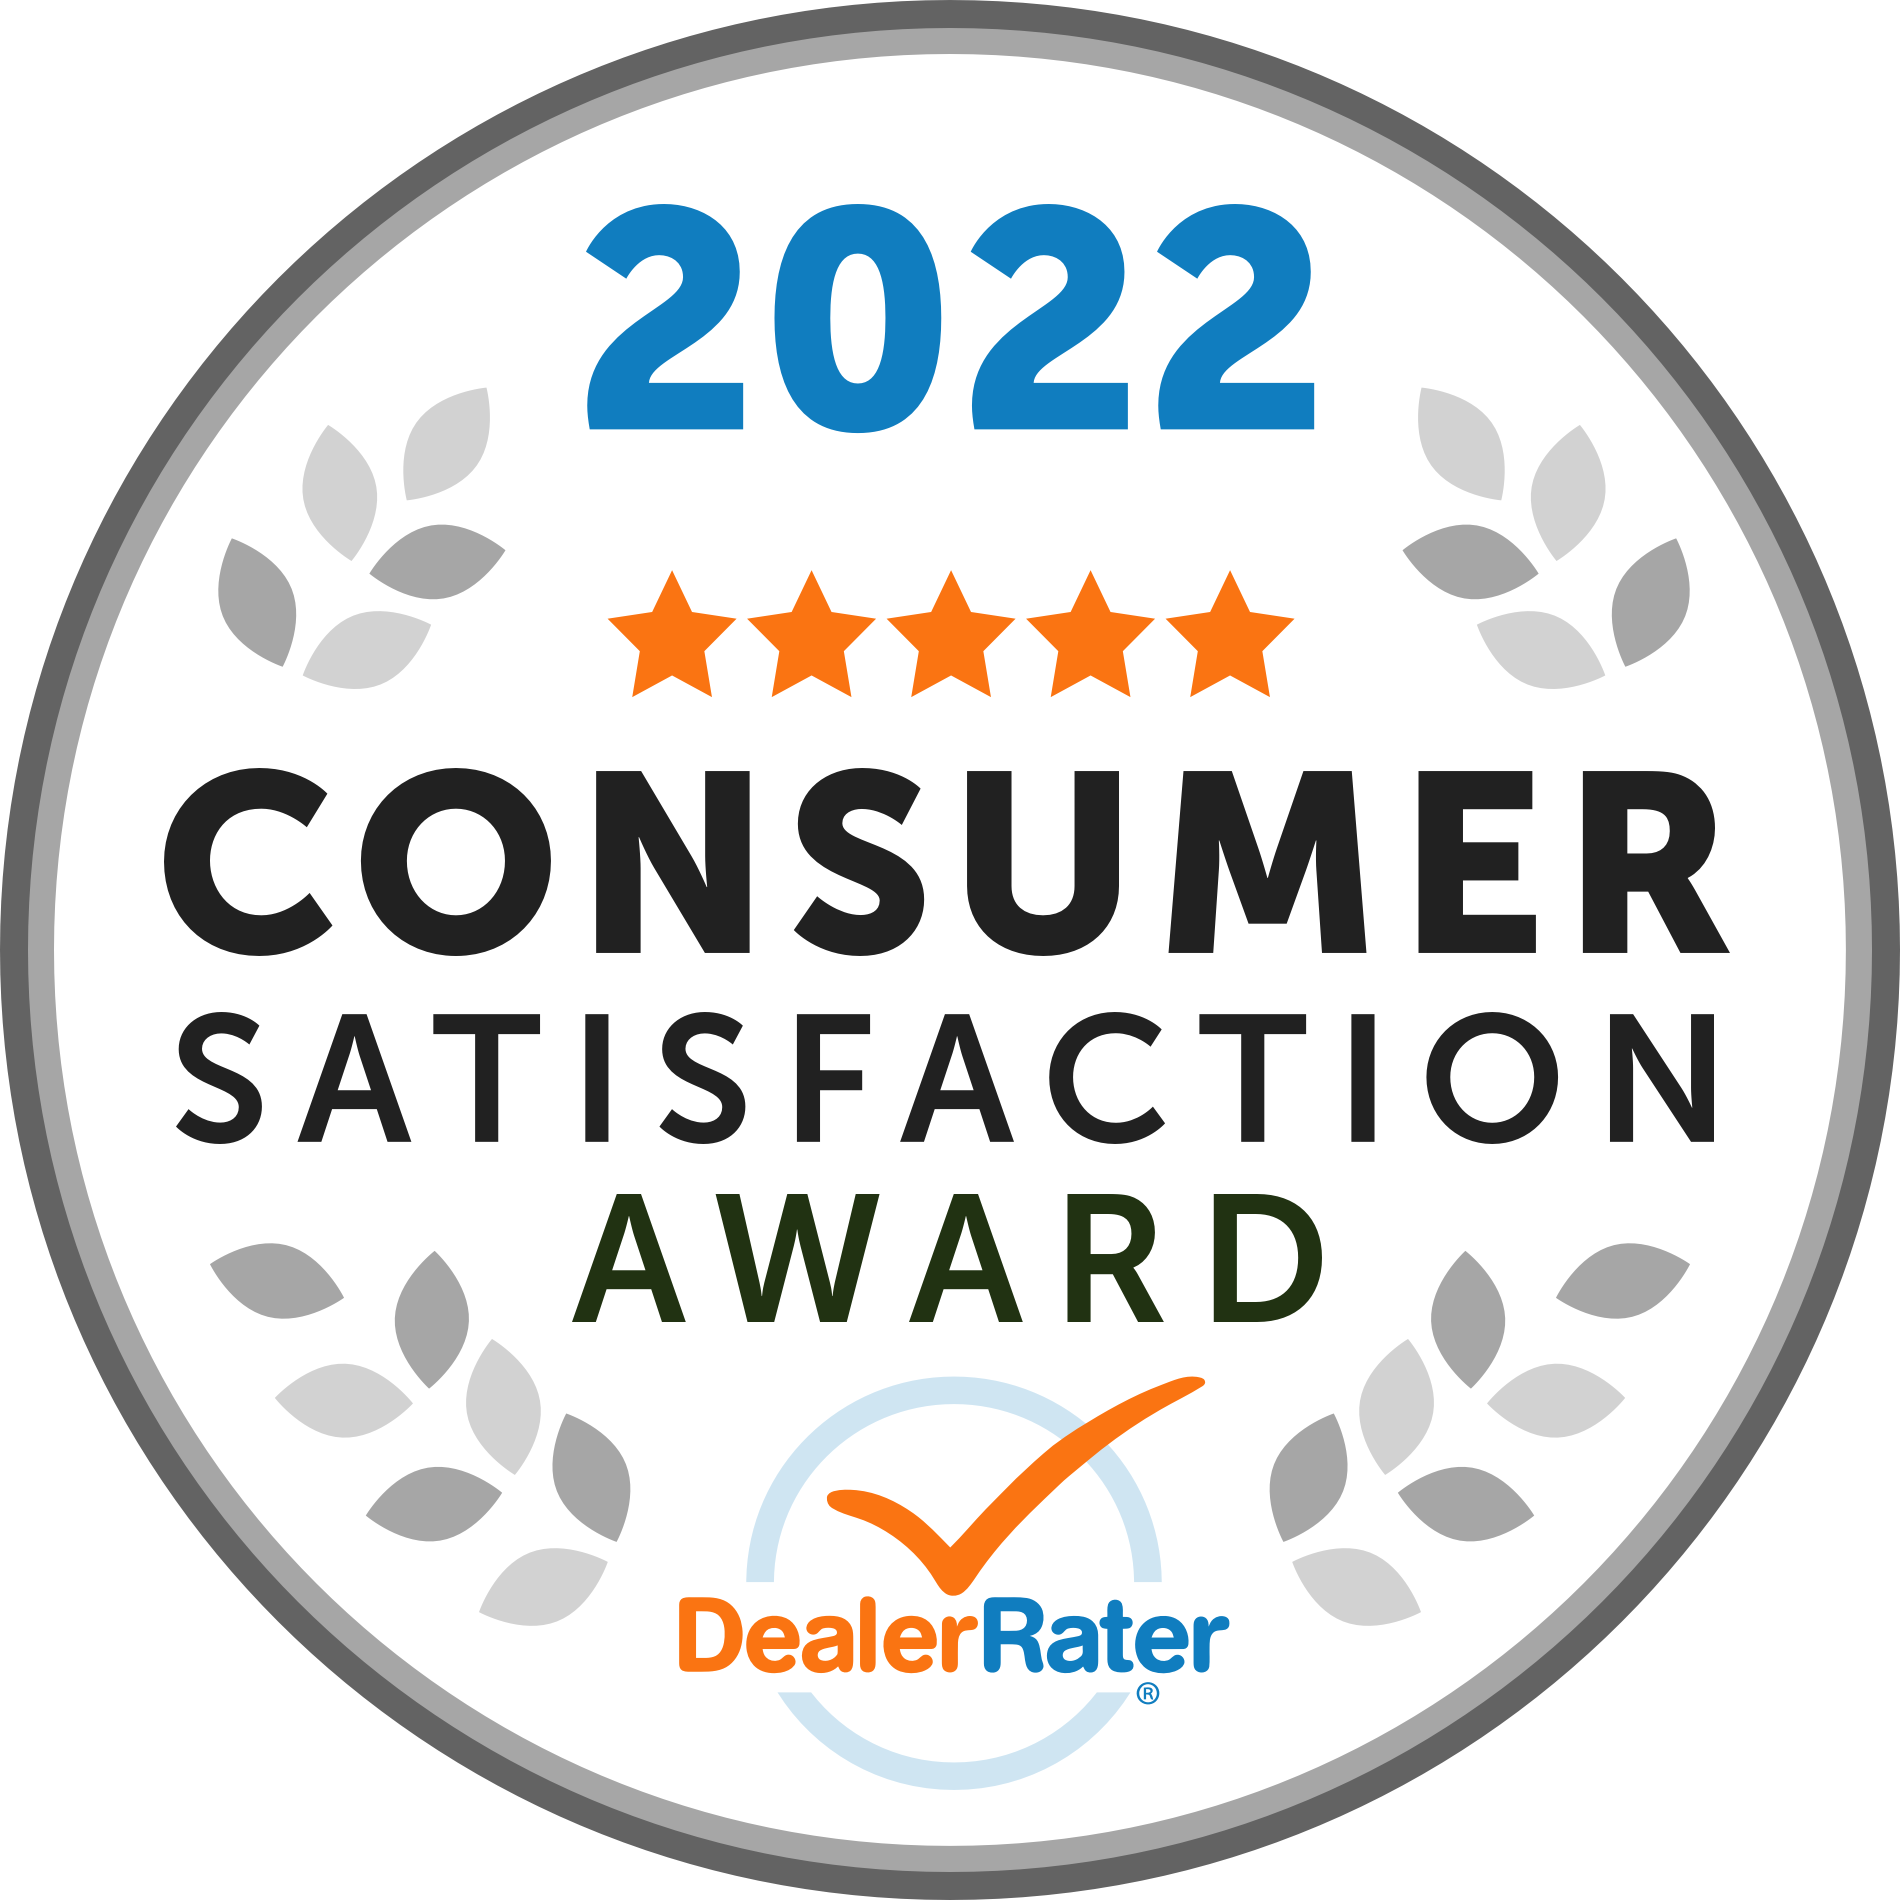 2020 Consumer Satisfaction Award